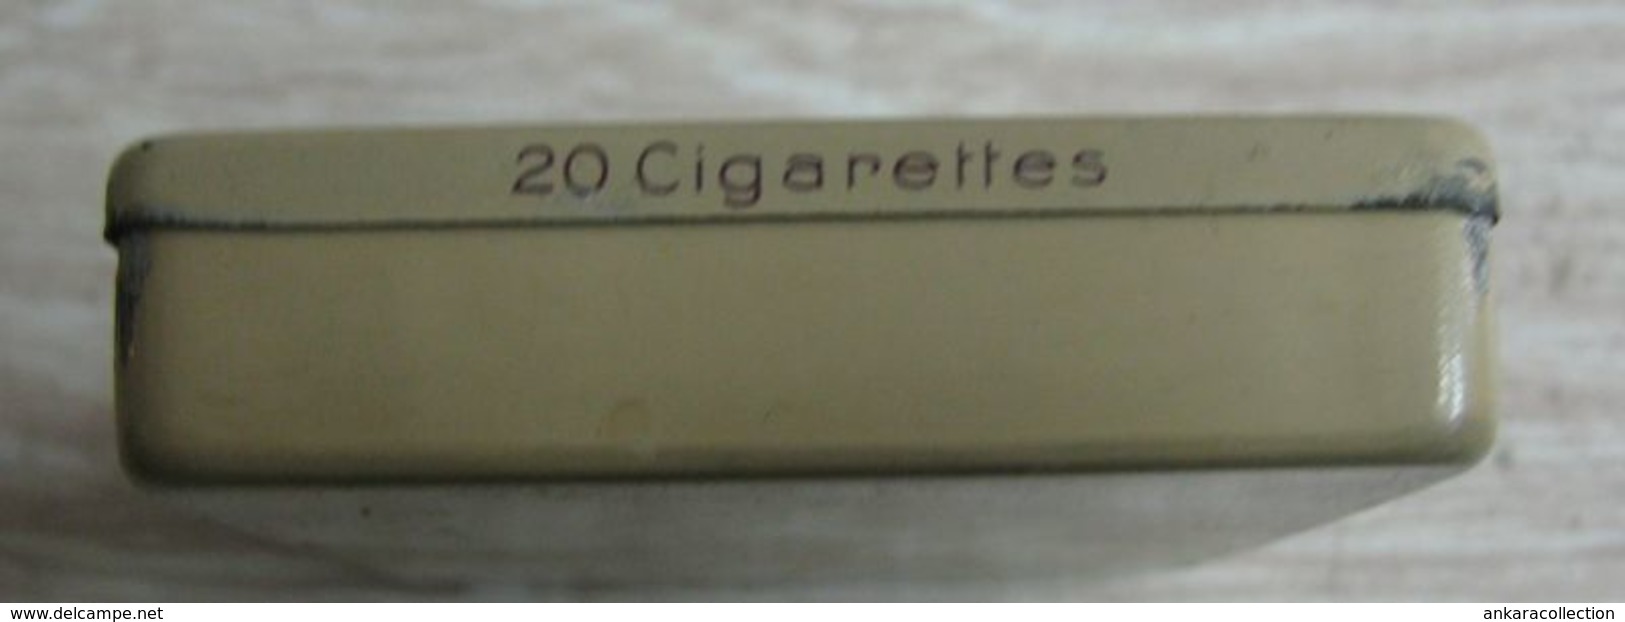 AC - DAVROS D. MISSIRIAN BRUXELLES CARTE ROYALE CIGARETTE - TOBACCO EMPTY VINTAGE TIN BOX - Boites à Tabac Vides